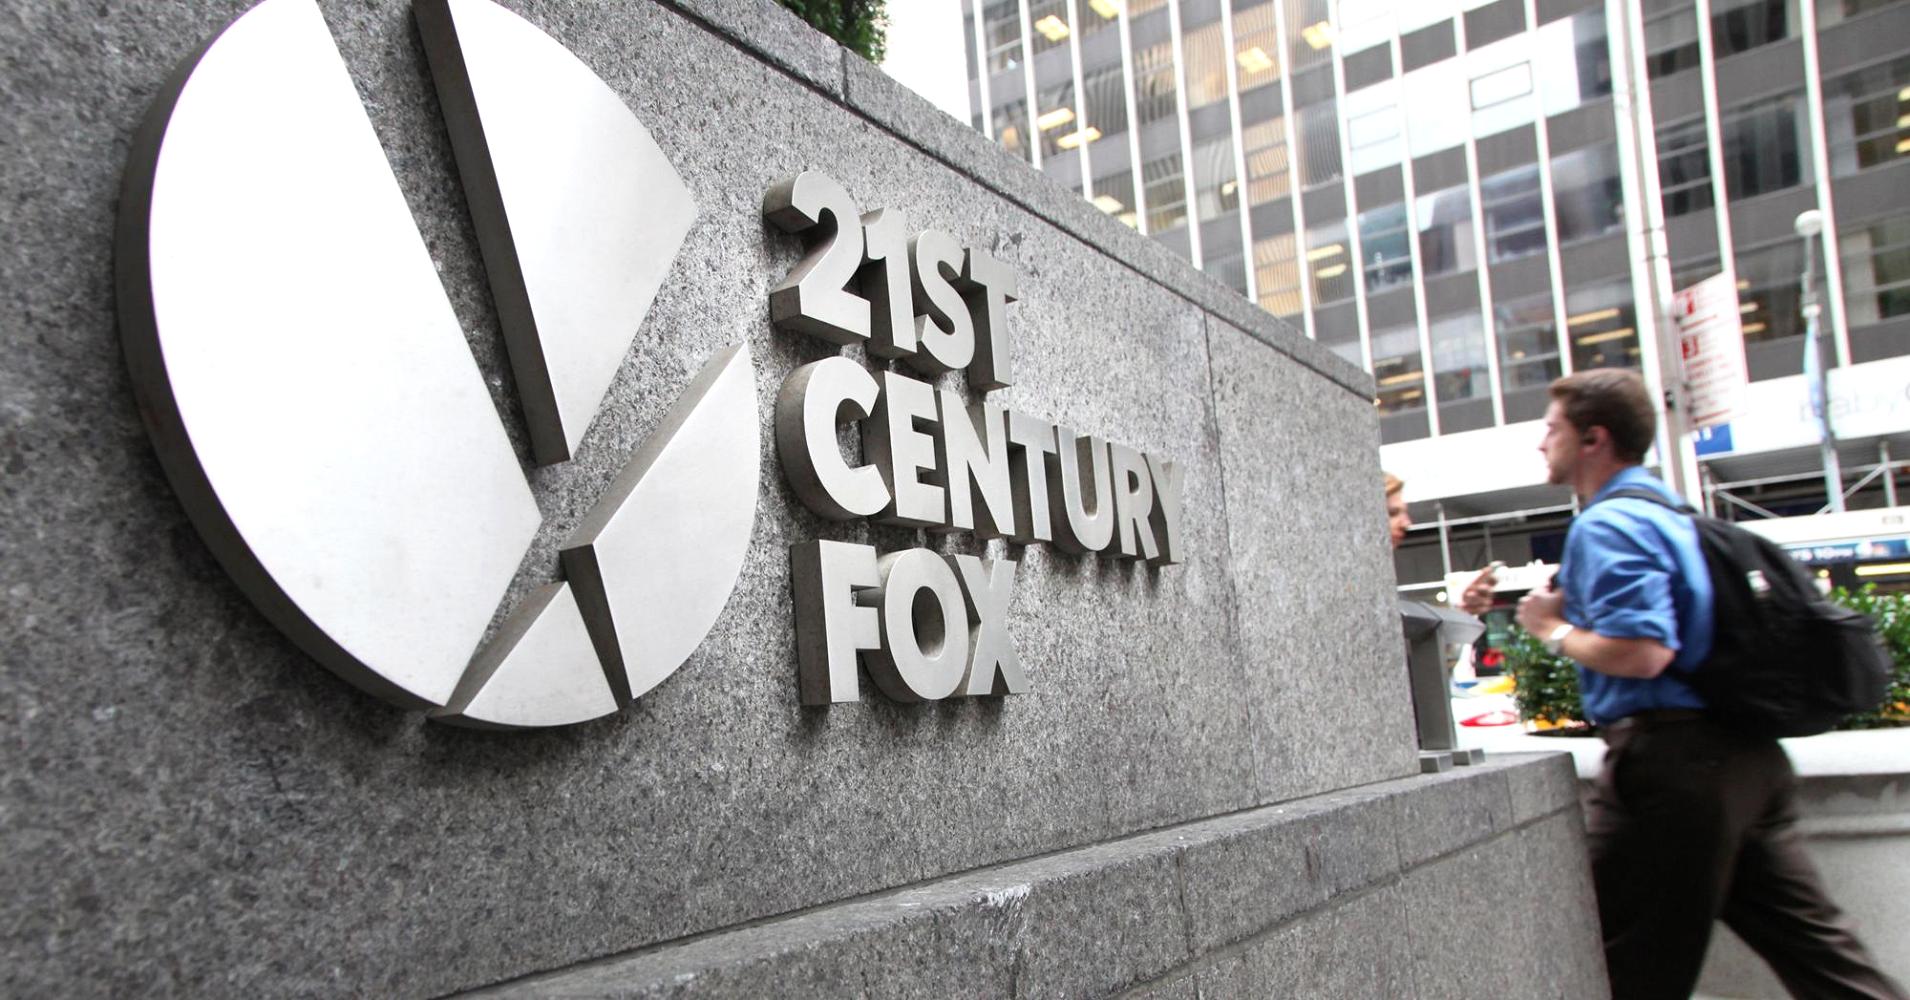 Disney has held talks to buy most of 21st Century Fox